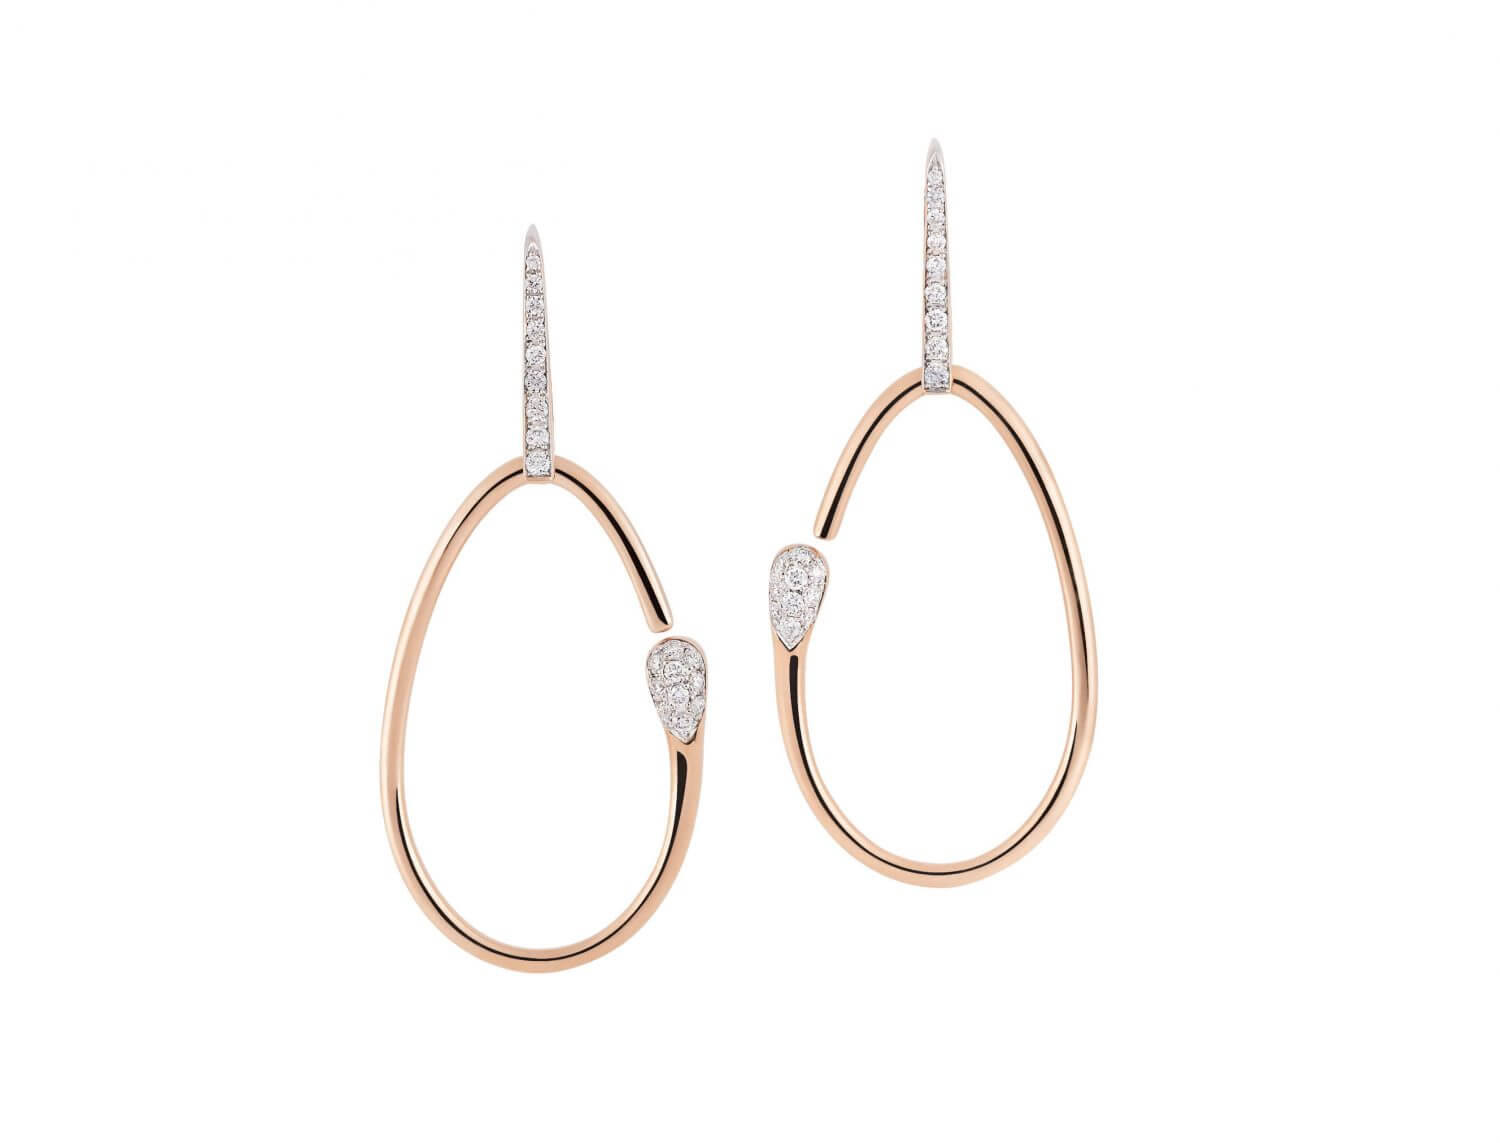 Goccia Earrings in Rose Gold with Diamonds - Orsini Fine Jewellery